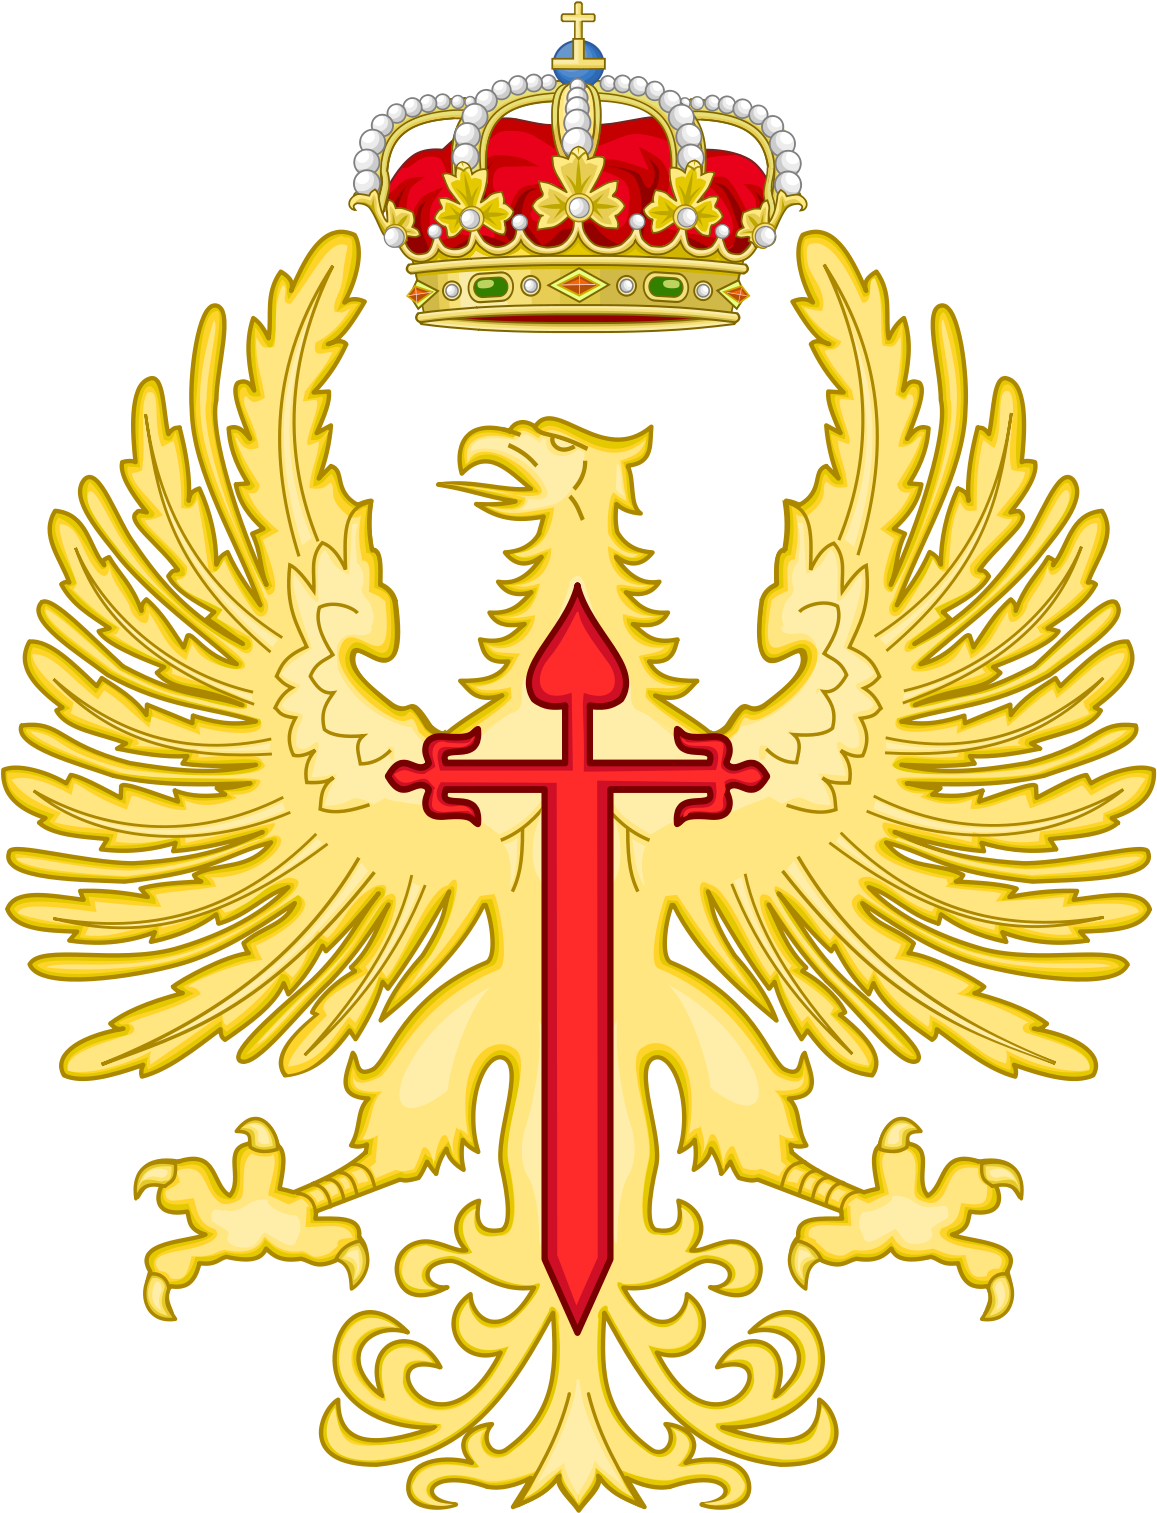 Spanish Military Courts - Spanish Army Symbol (1200x1537)